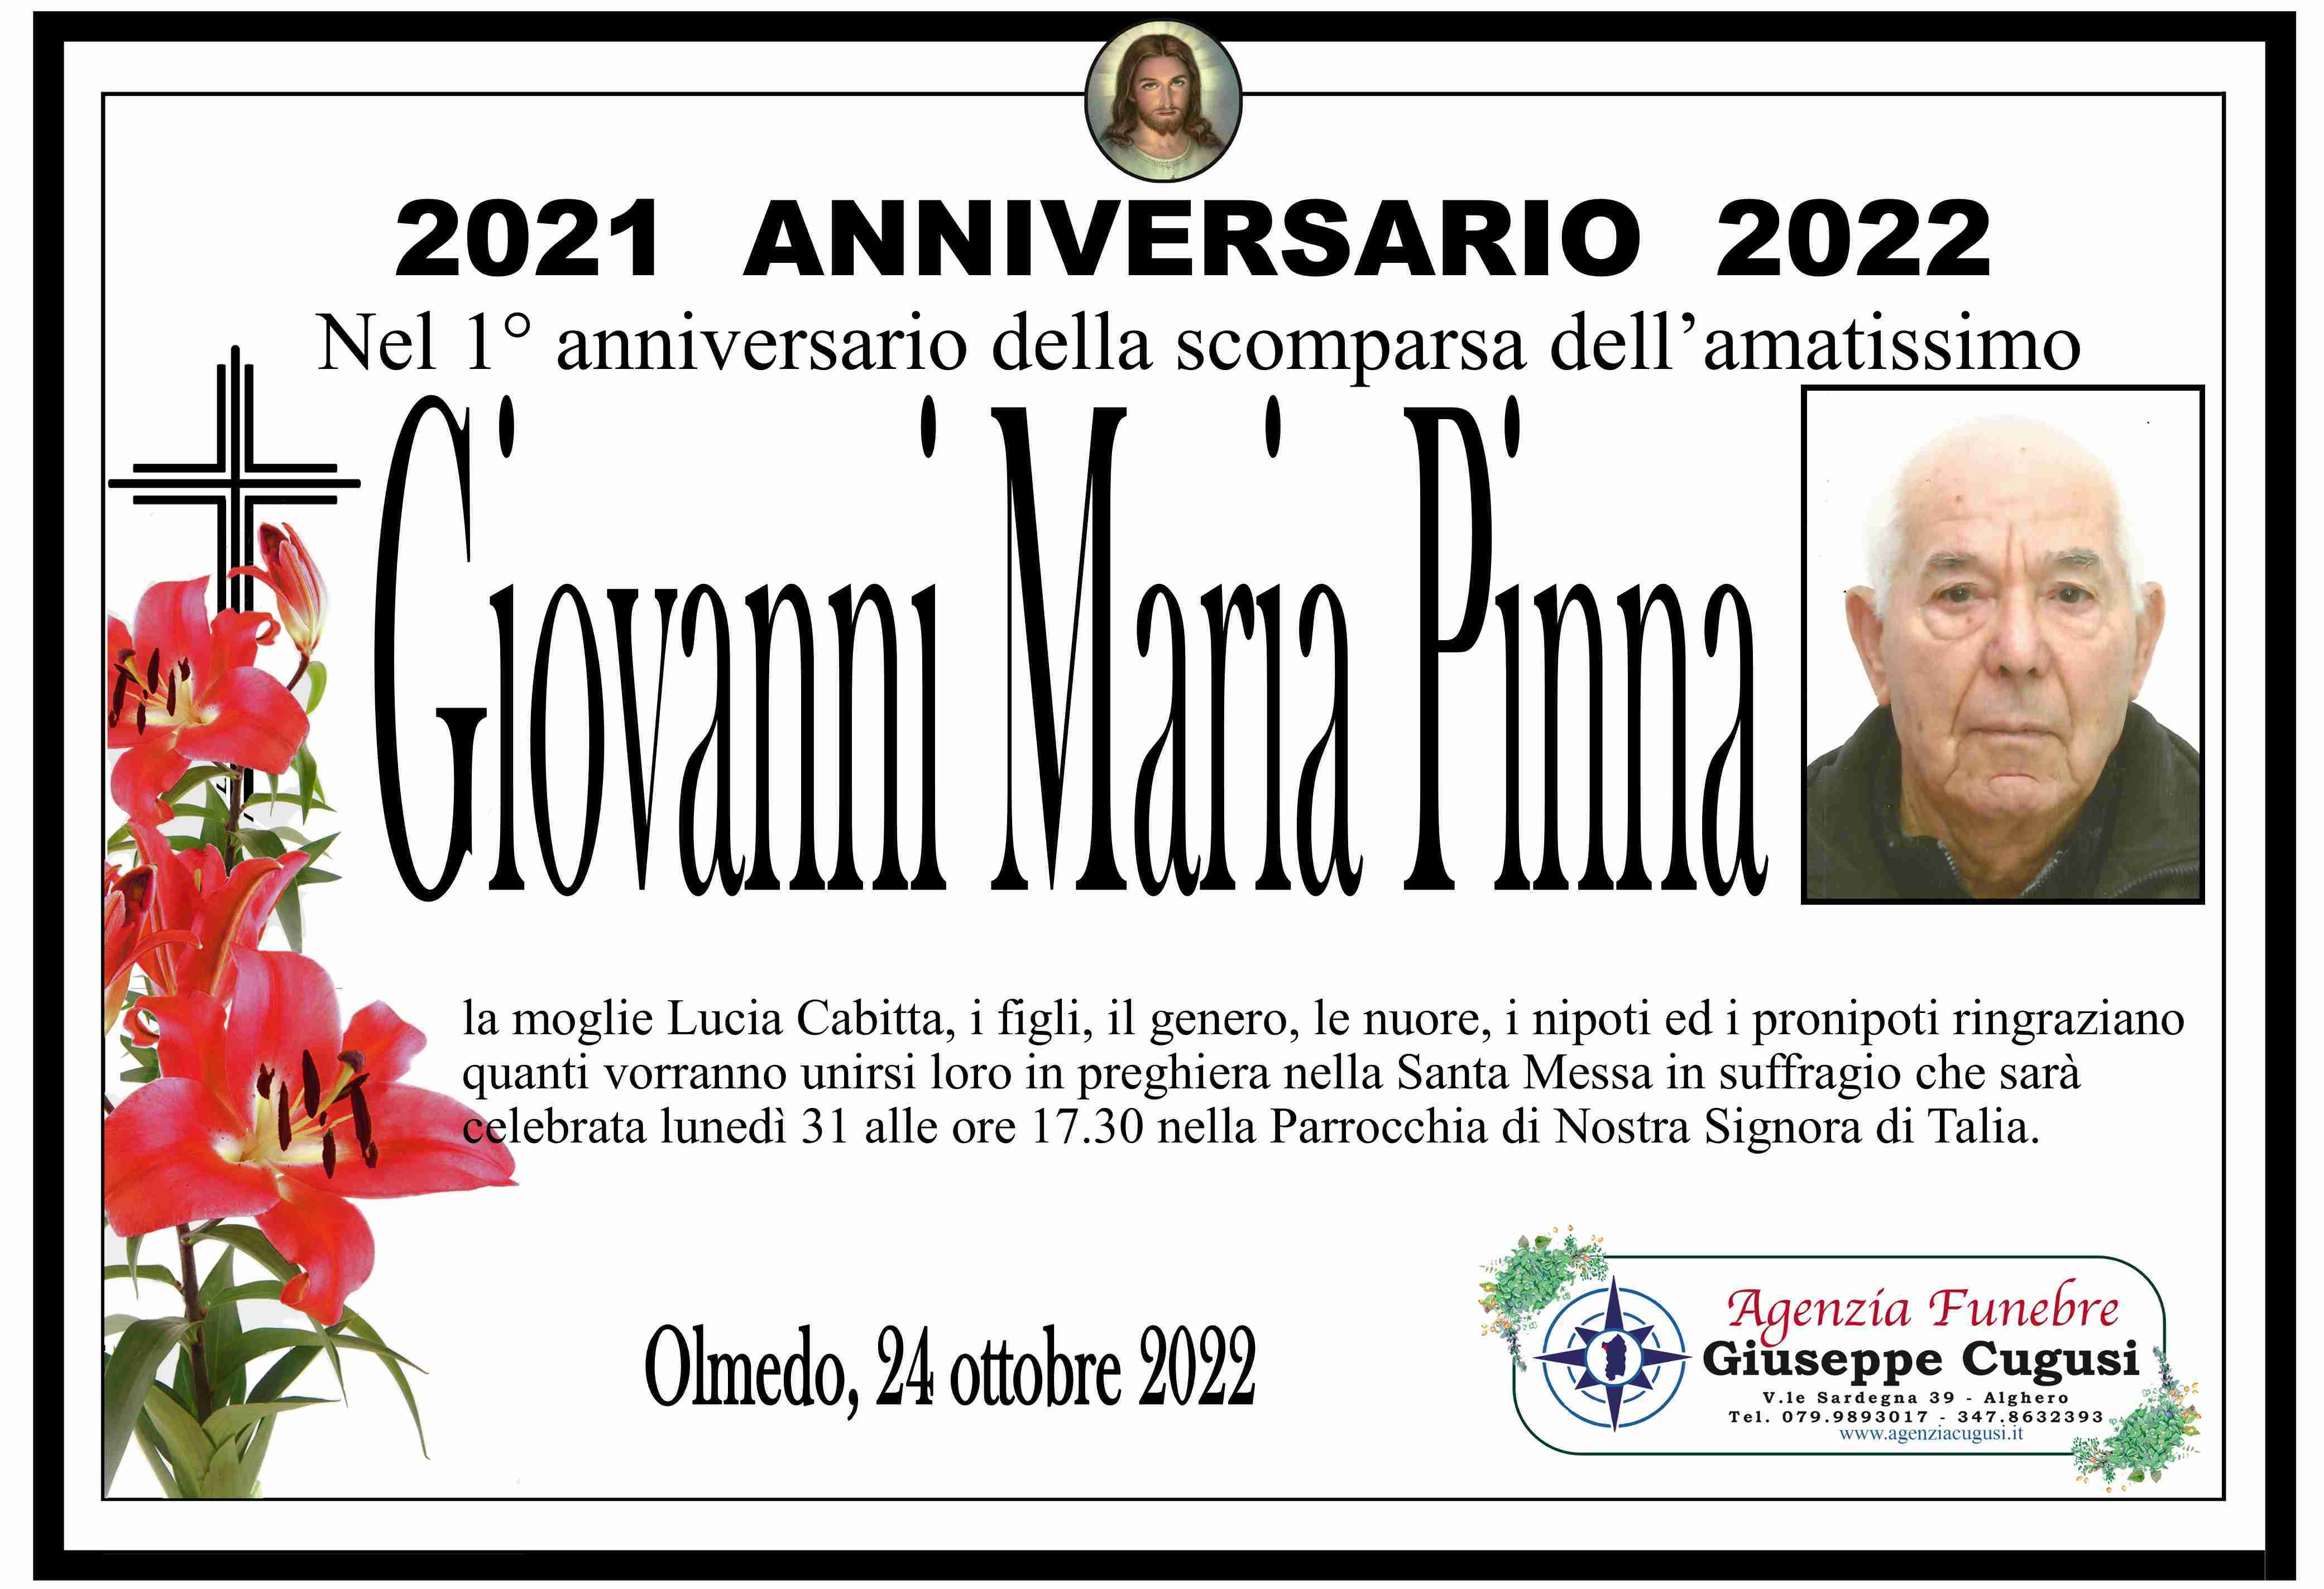 Giovanni Maria Pinna